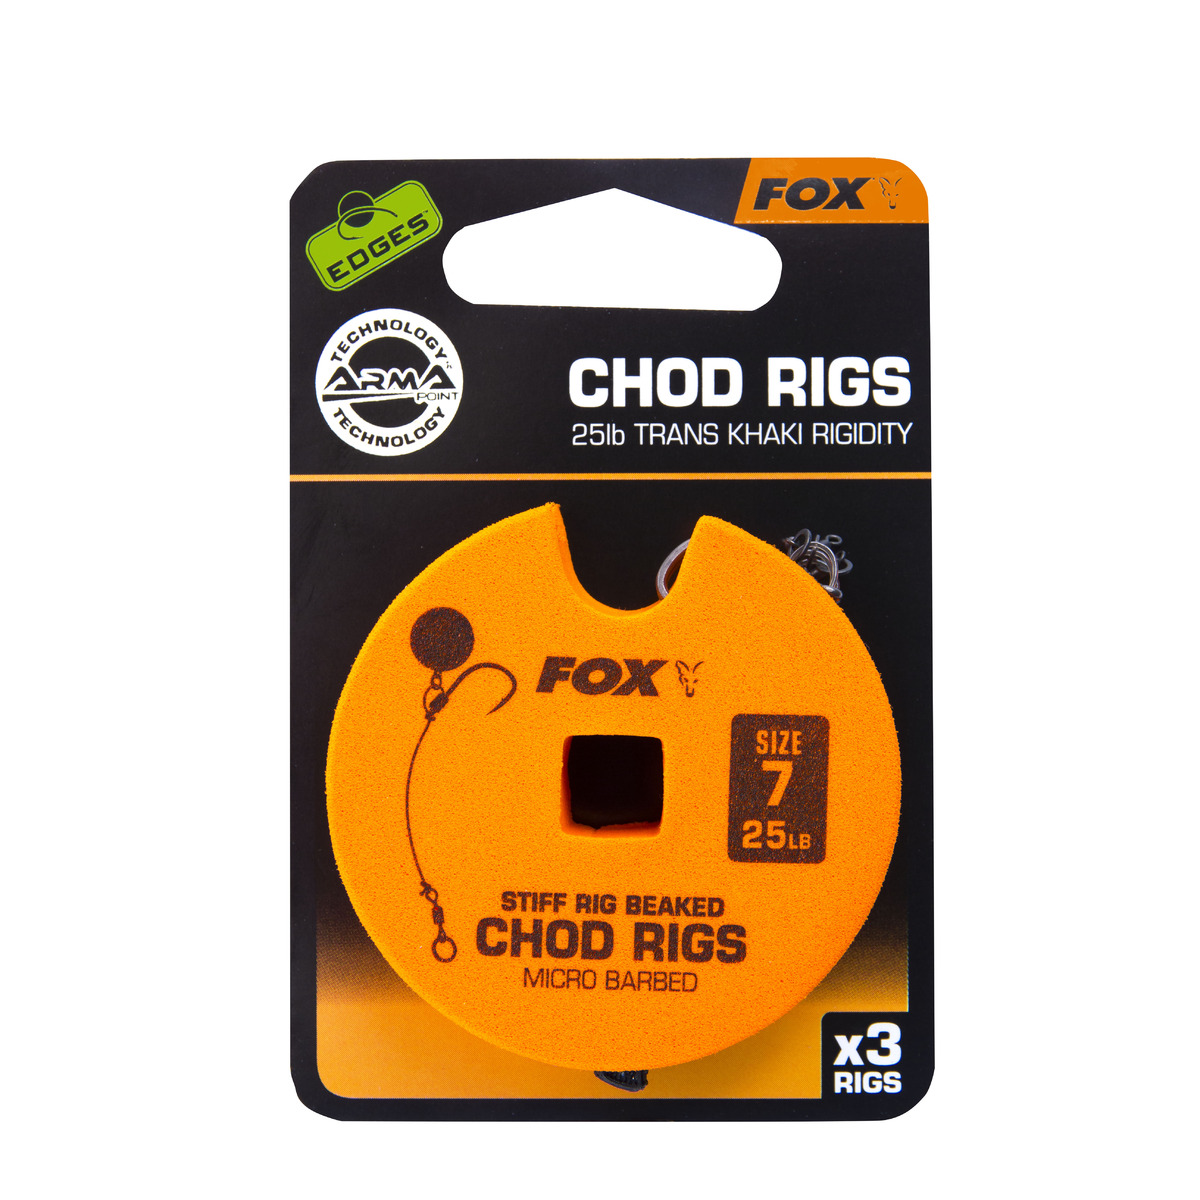 Fox Edges Chod Rigs - Standard - 25lb, Size 7